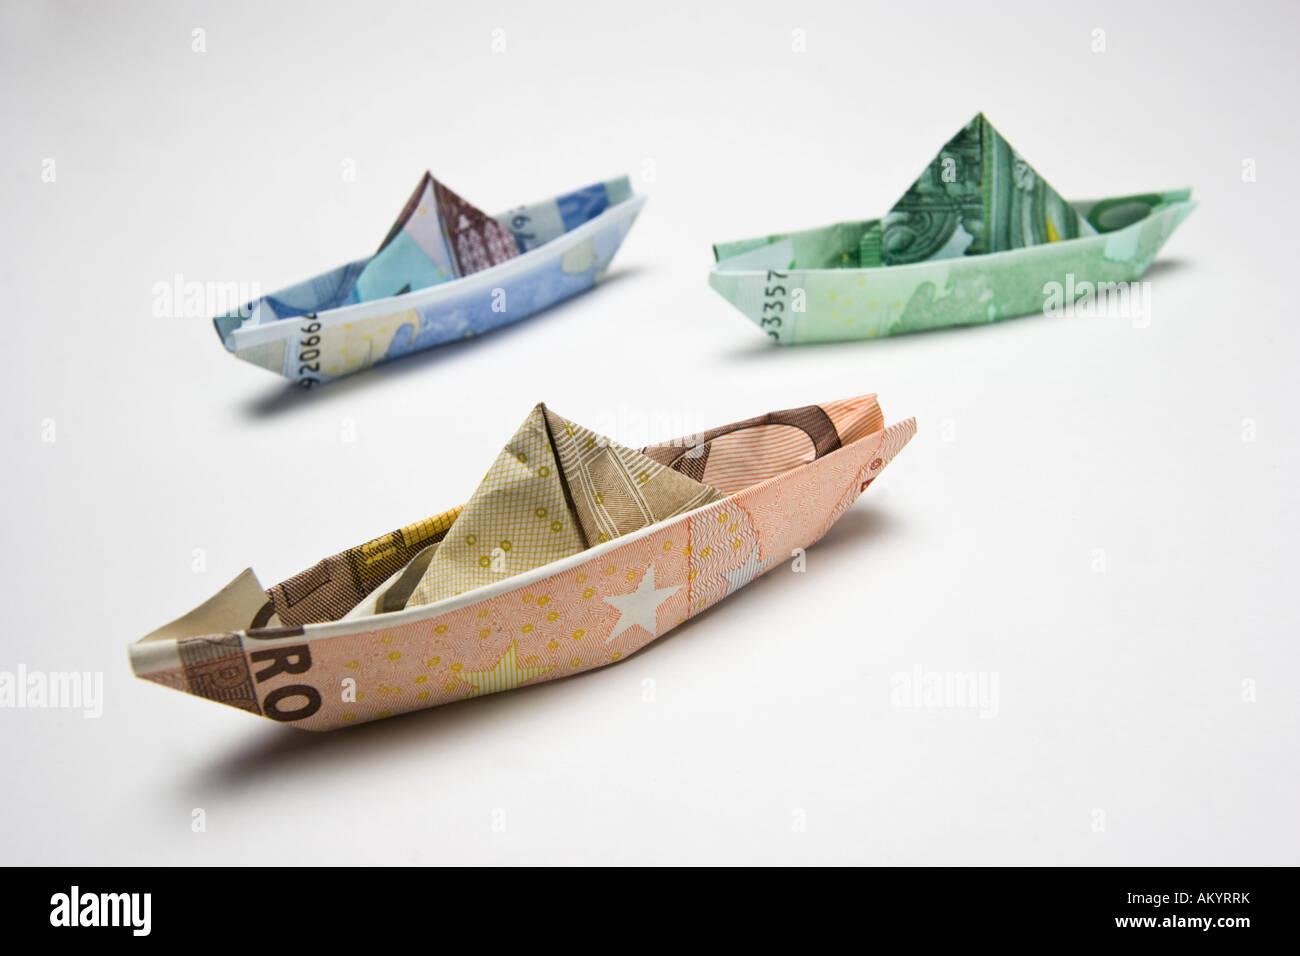 Small ships made of banknotes Stock Photo